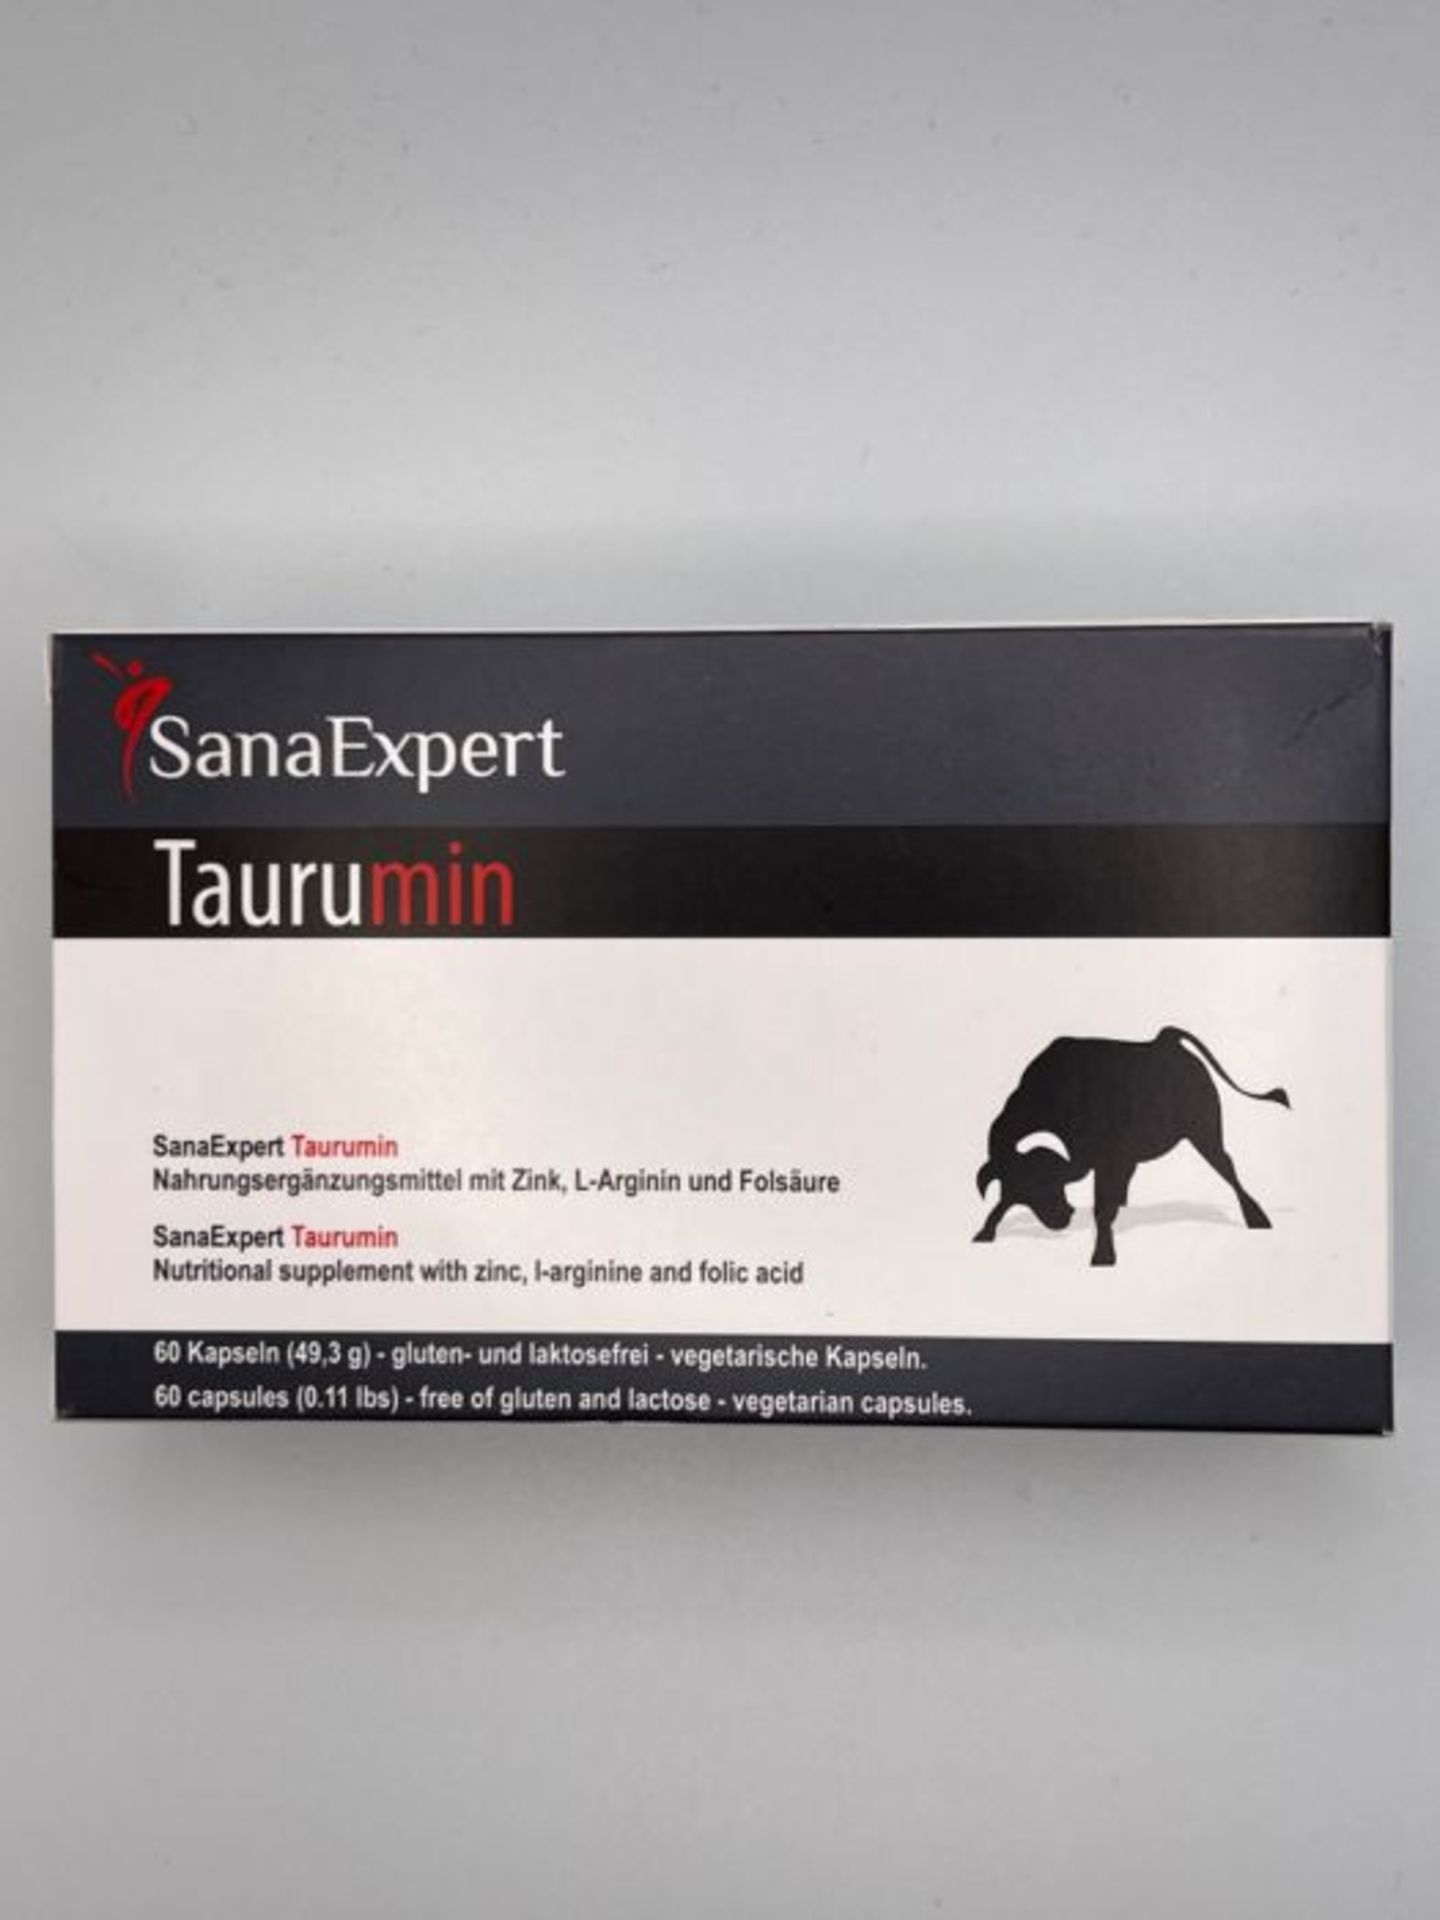 SanaExpert Taurumine with L-arginine, Alpha-liponic Acid, zinc, folic Acid, Fertility - Image 2 of 3